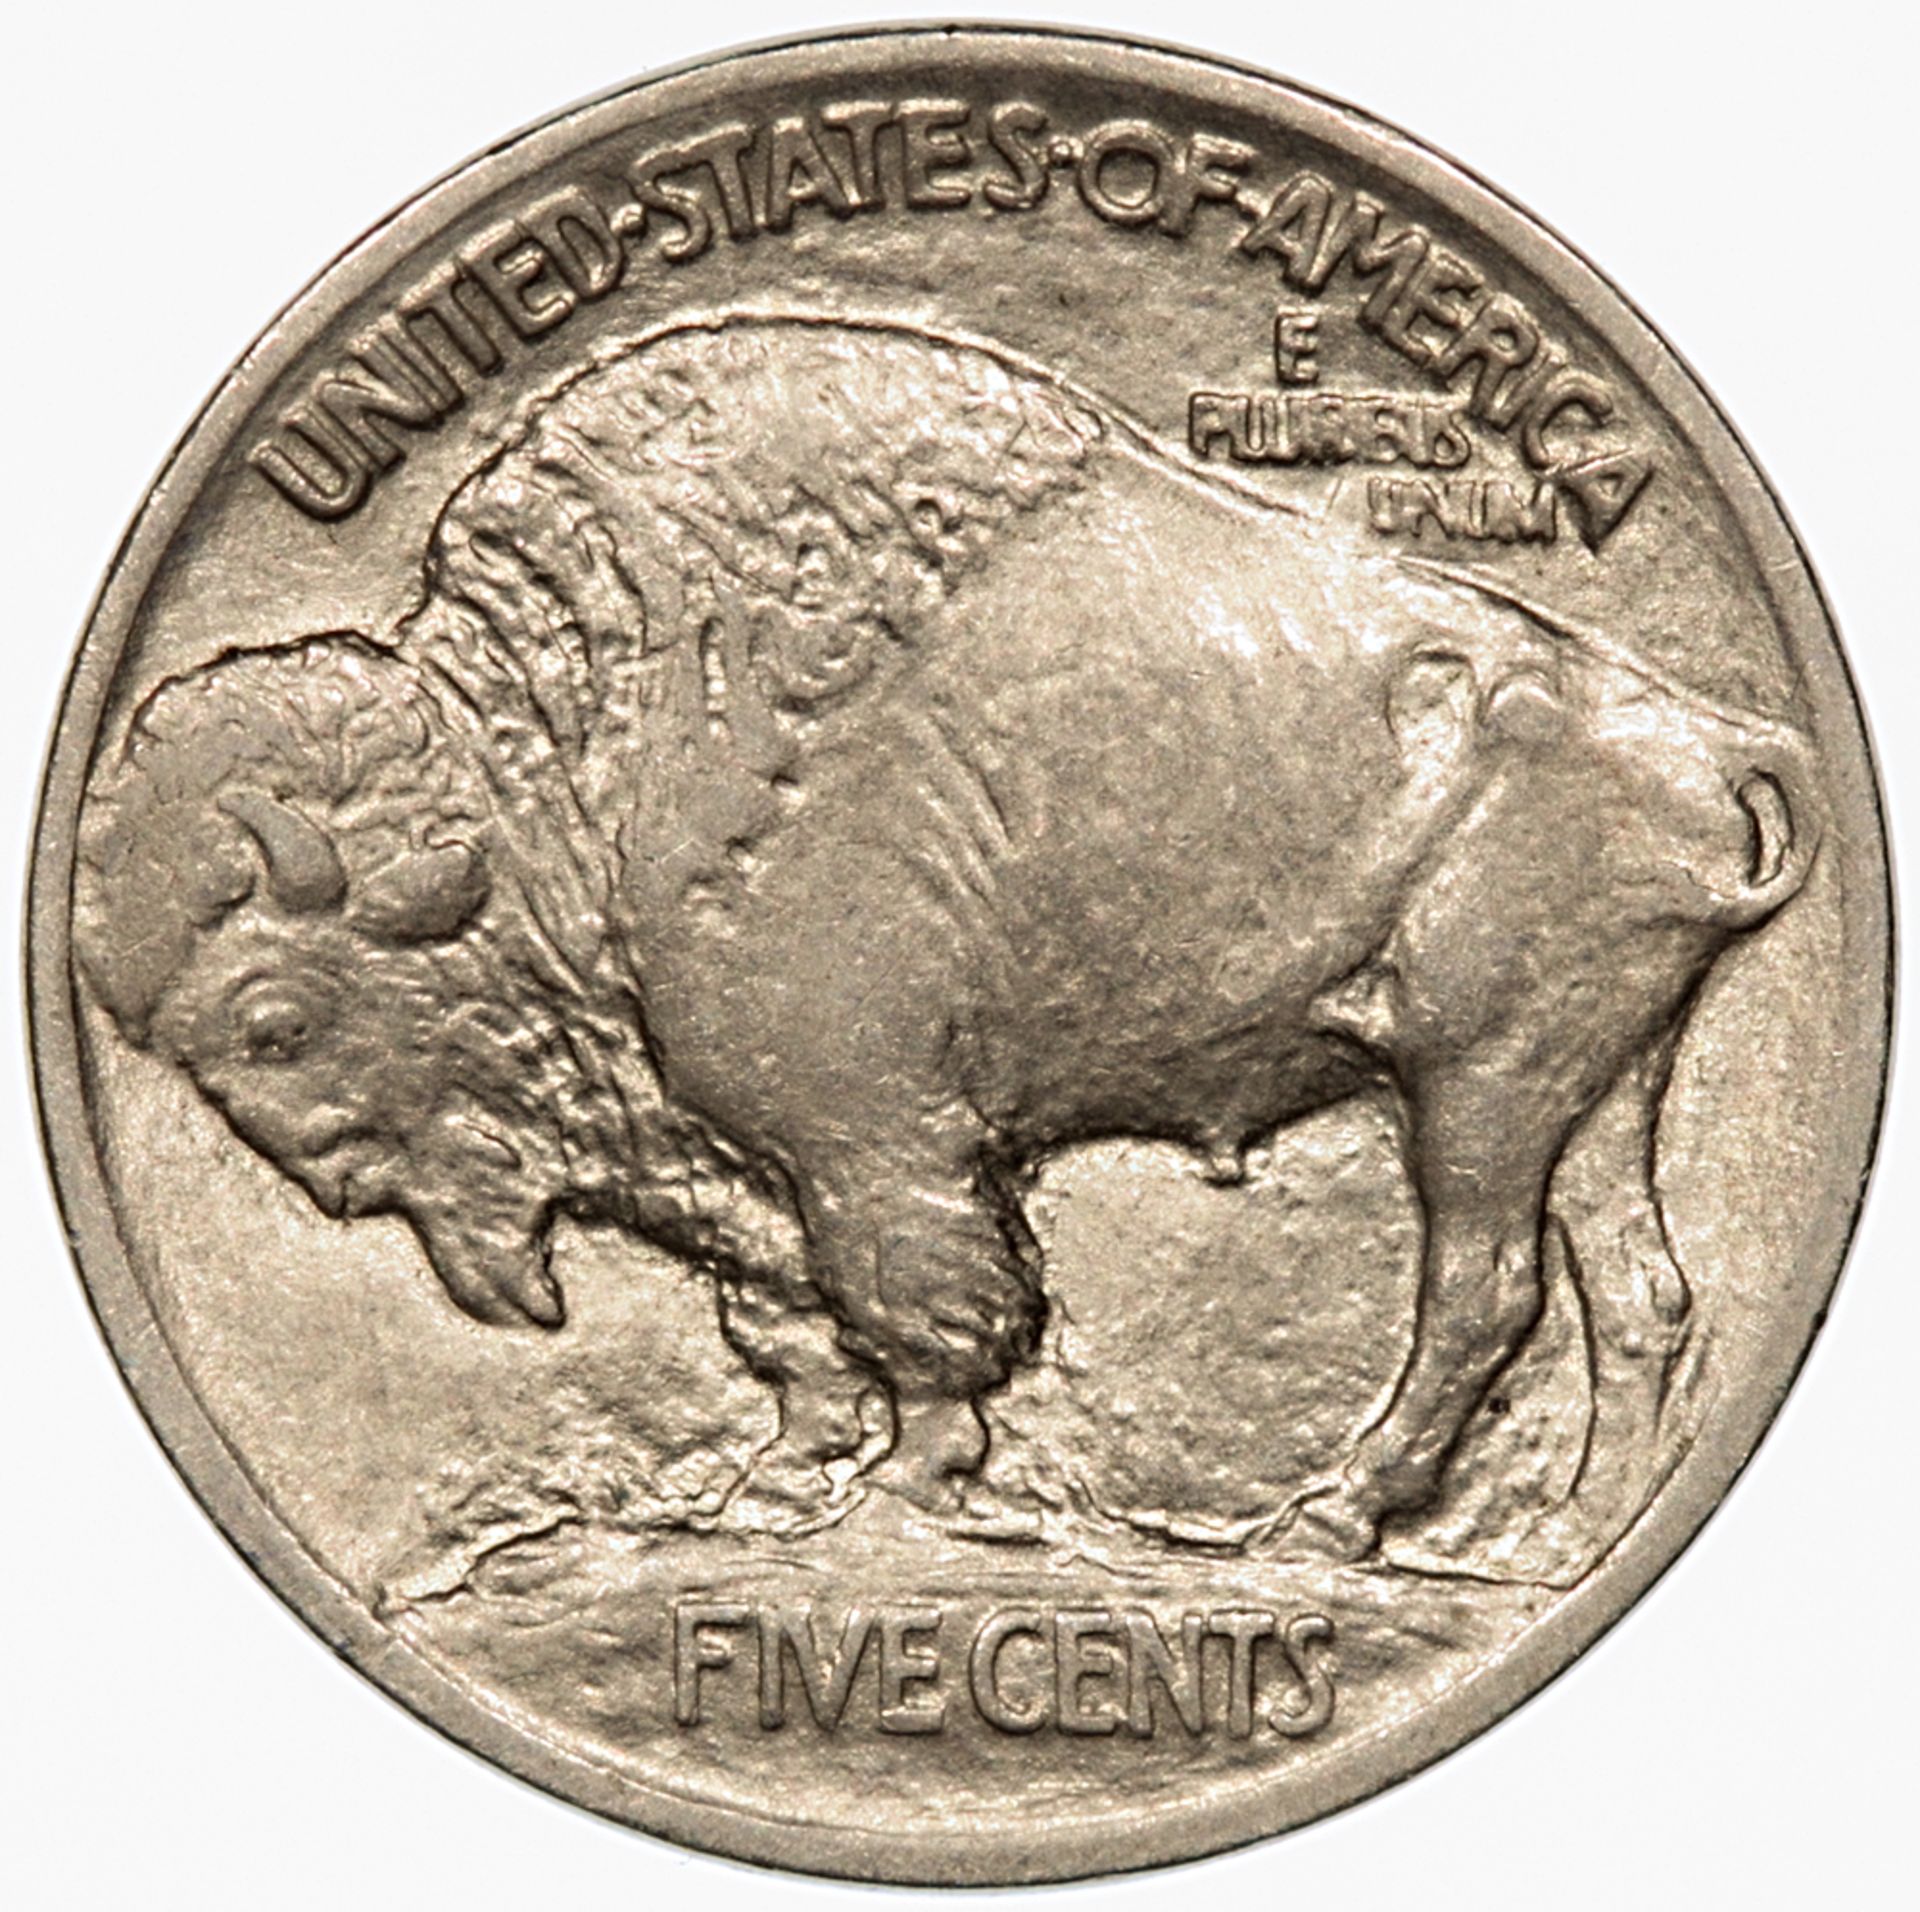 USA - Buffalo Nickel 1913, - Image 2 of 2